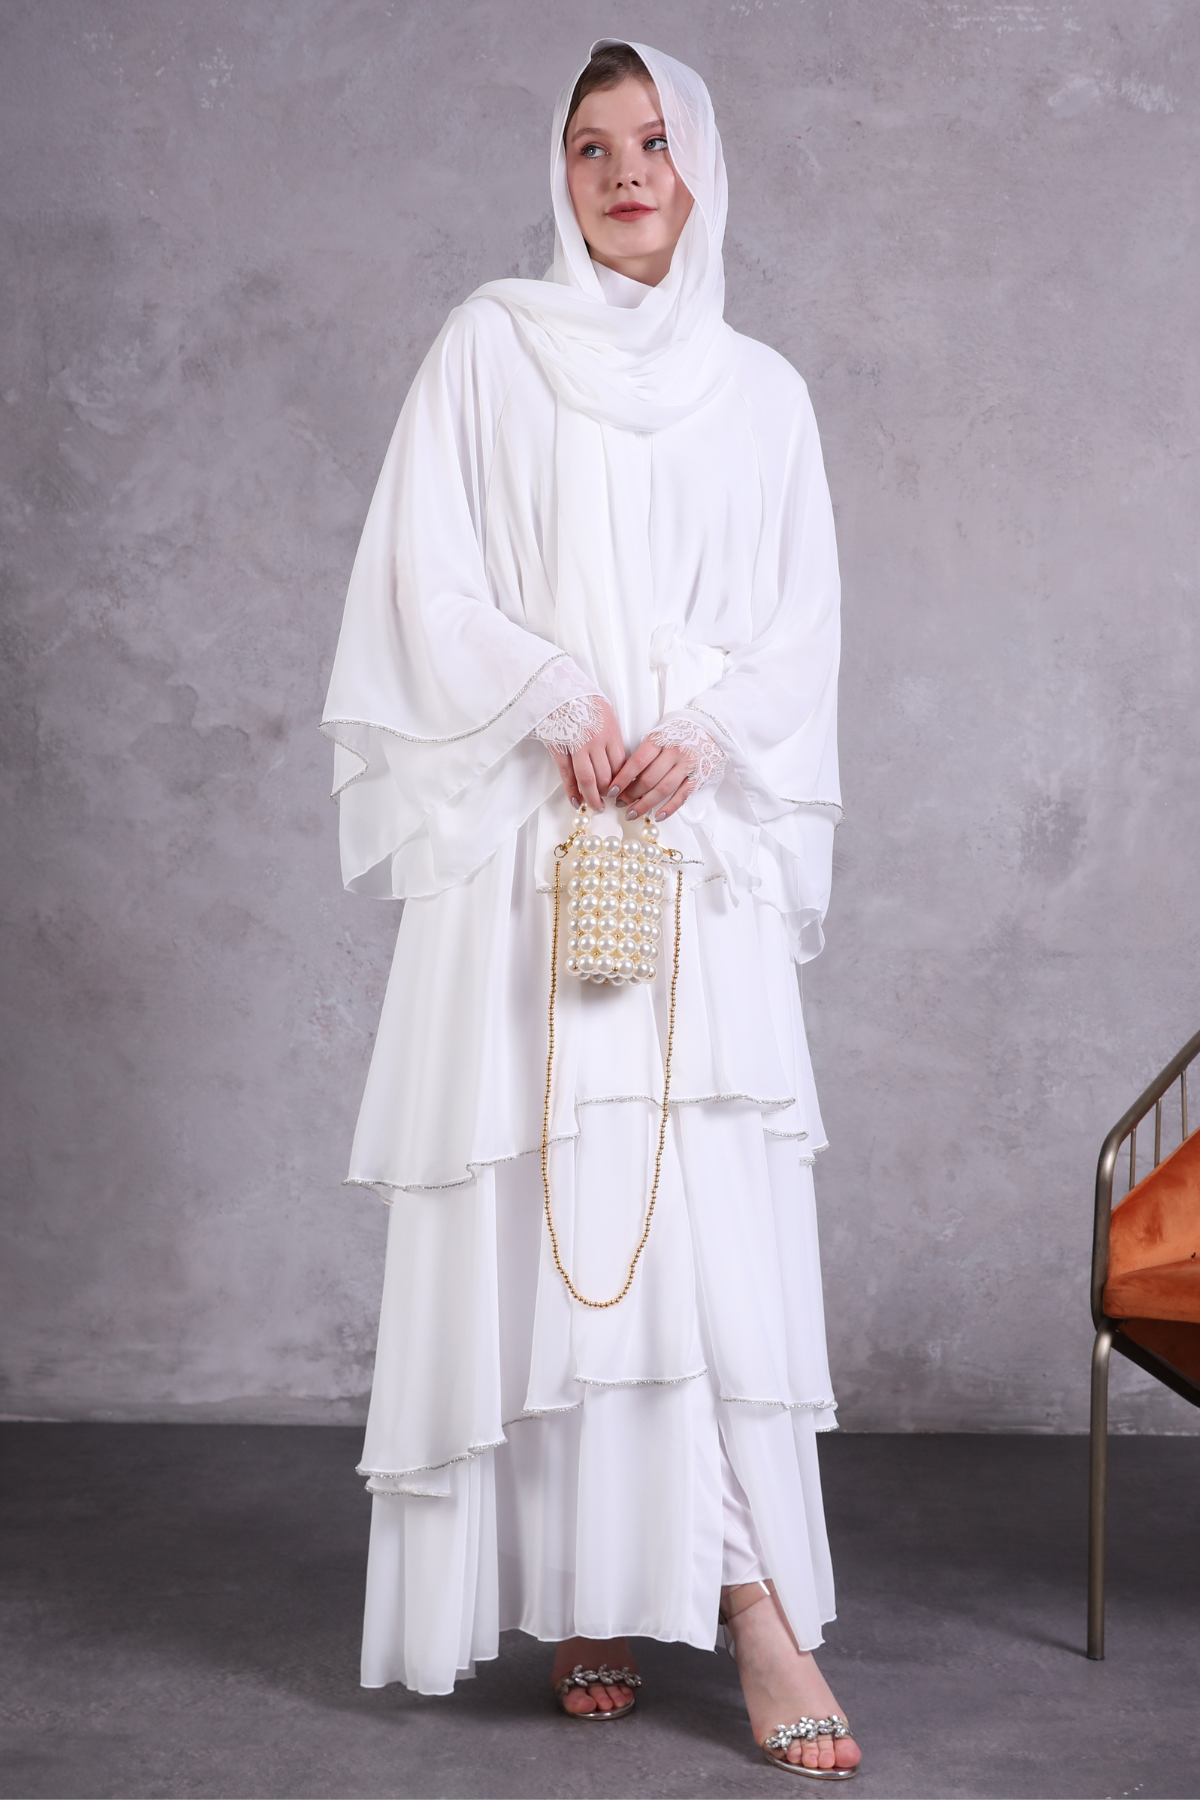 Snowflake Elegance Chiffon Abaya: A Three-Layered White Beauty Adorned with Swarovski